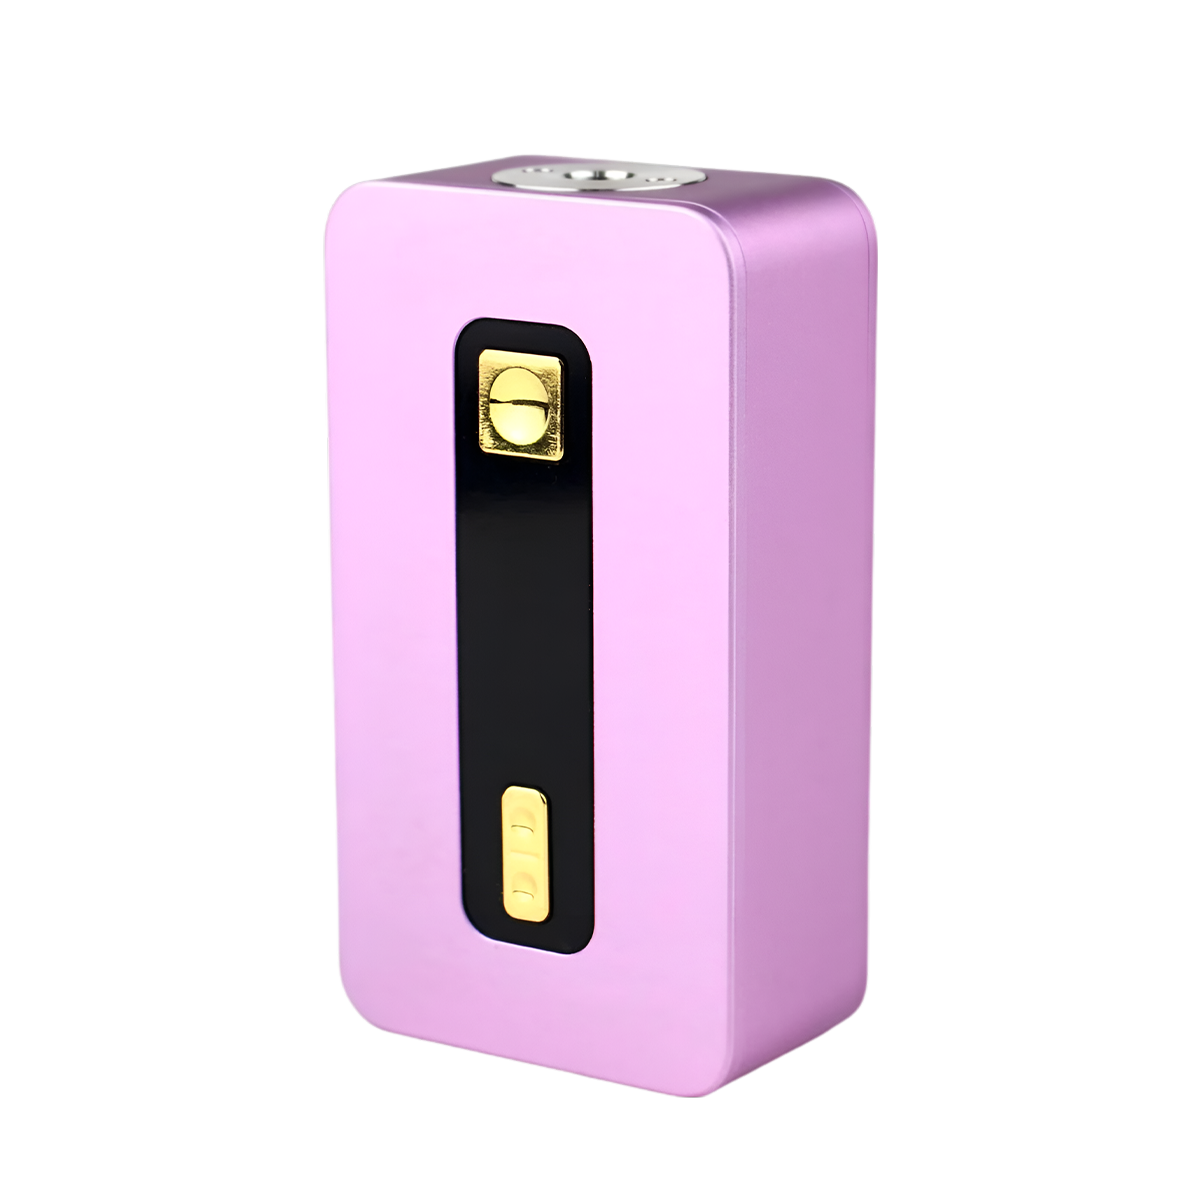 Dovpo Themis Box-Mod Kit Lilac  